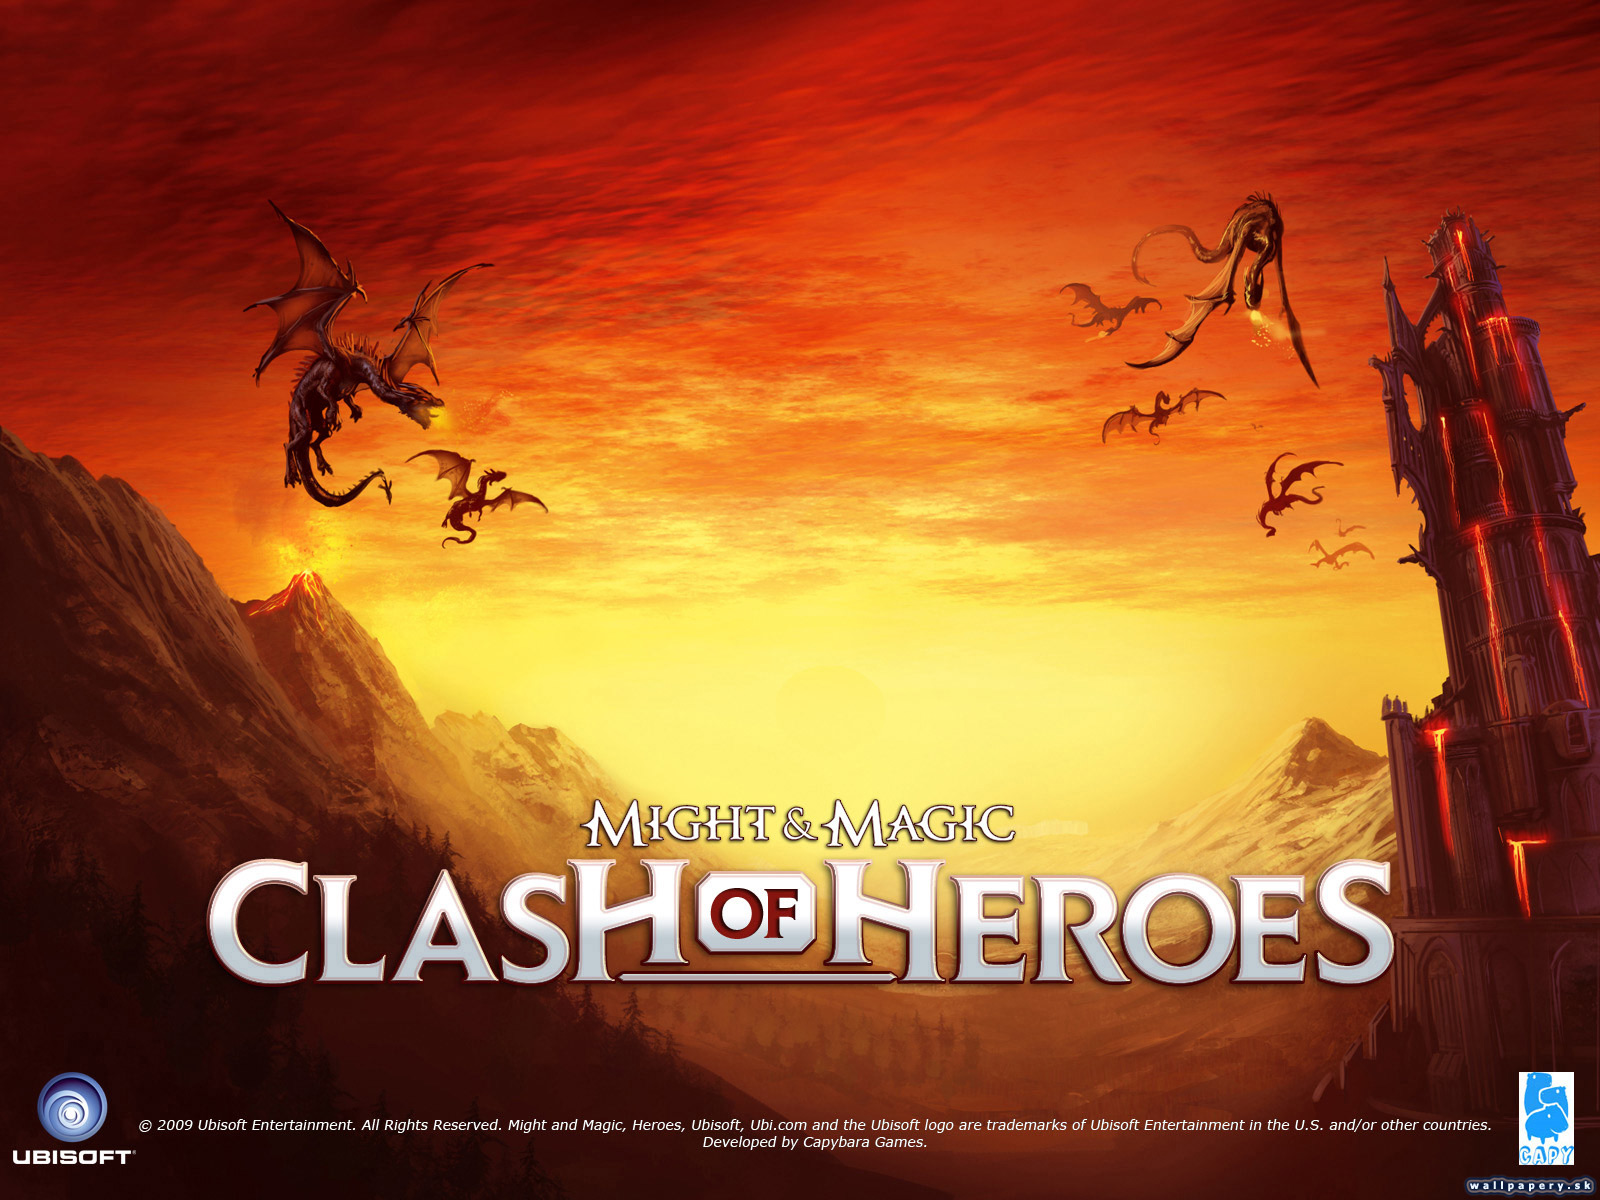 Might & Magic: Clash of Heroes - wallpaper 7